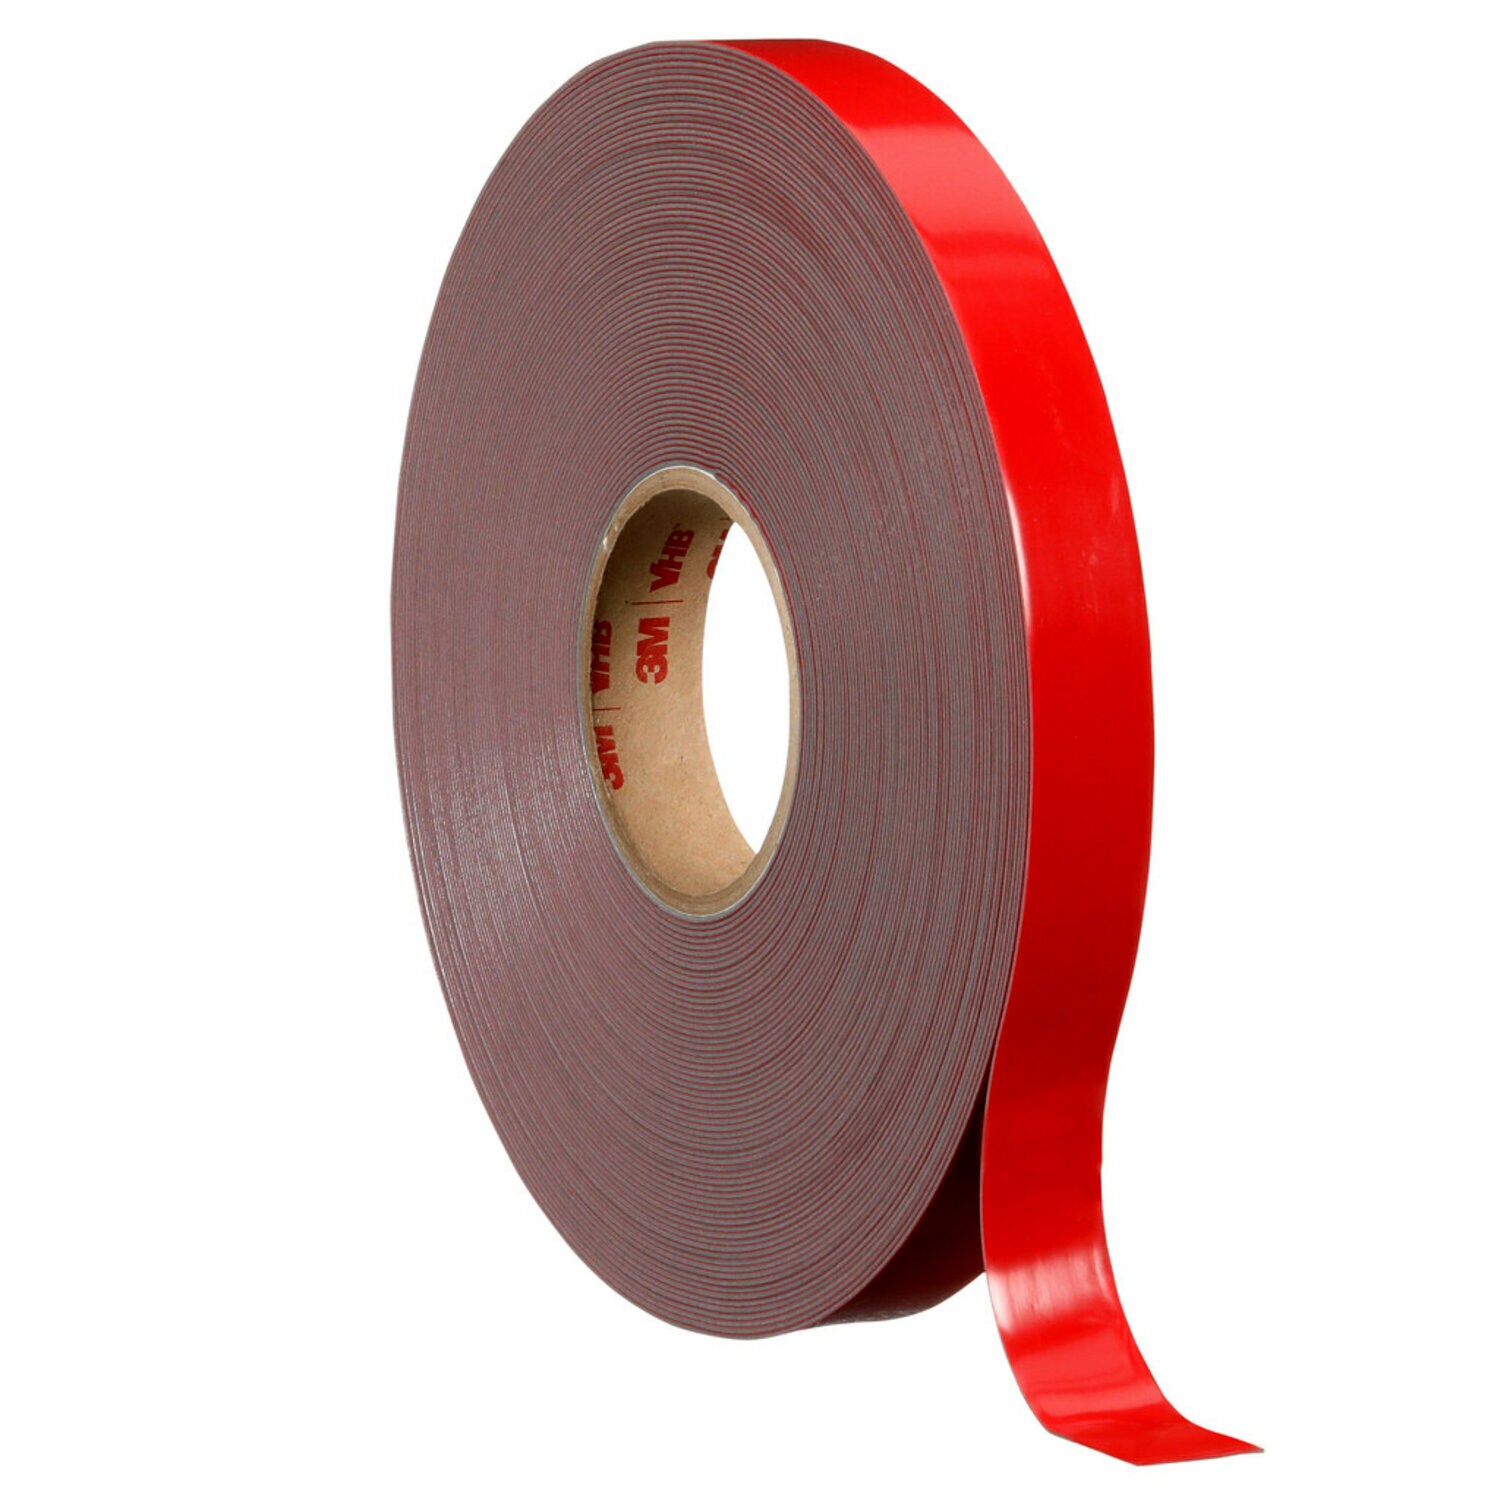 3M Vinyl Tape 471 Red, 1/2 in x 36 yd